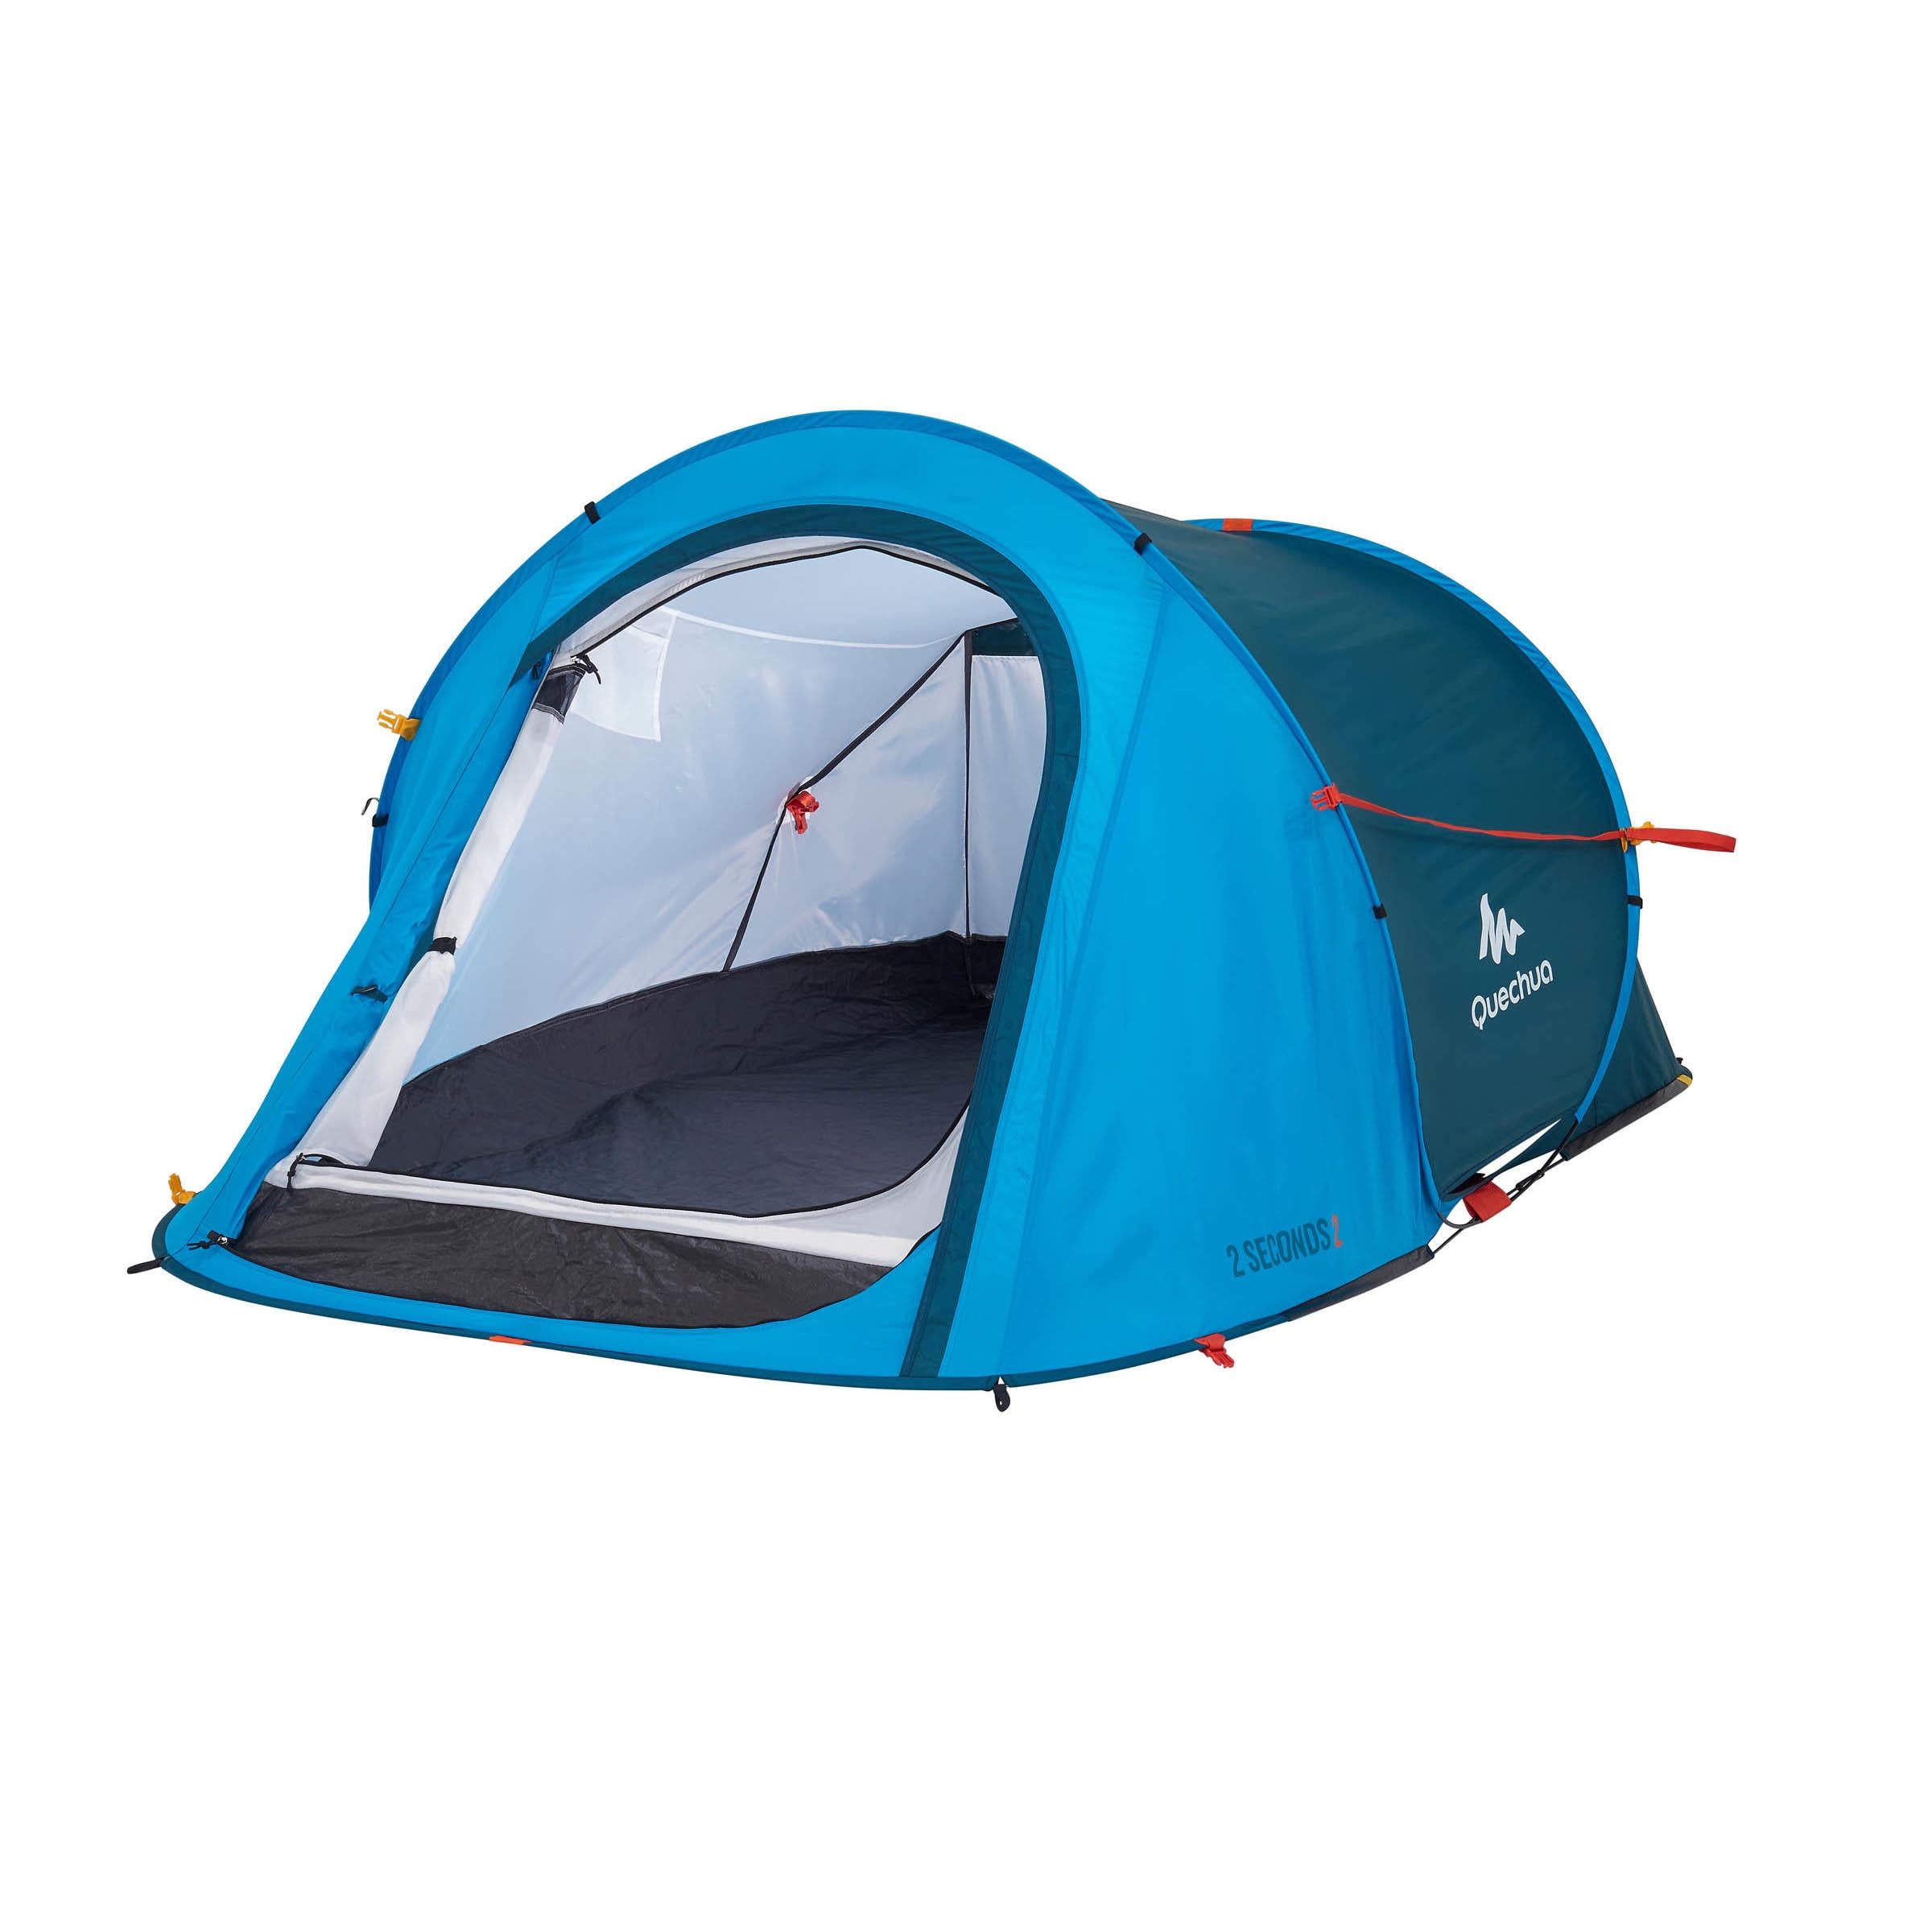 Decathlon Quechua, 2 Second Pop Tent, Waterproof, 2 Person, - Walmart.com